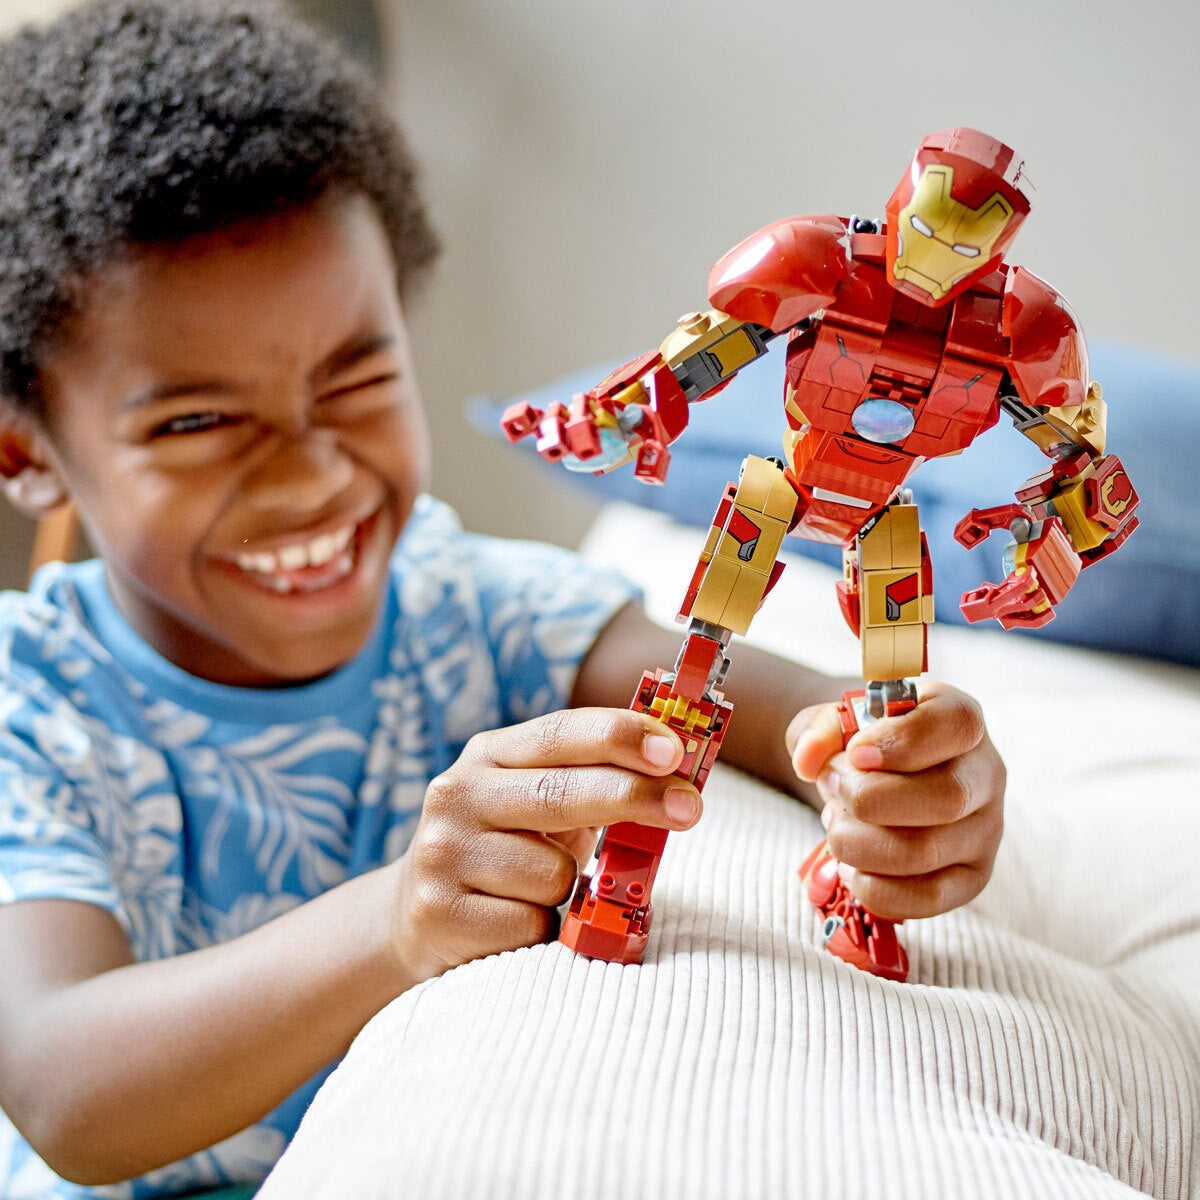 LEGO Marvel The Infinity Saga Iron Man Figure - 76206